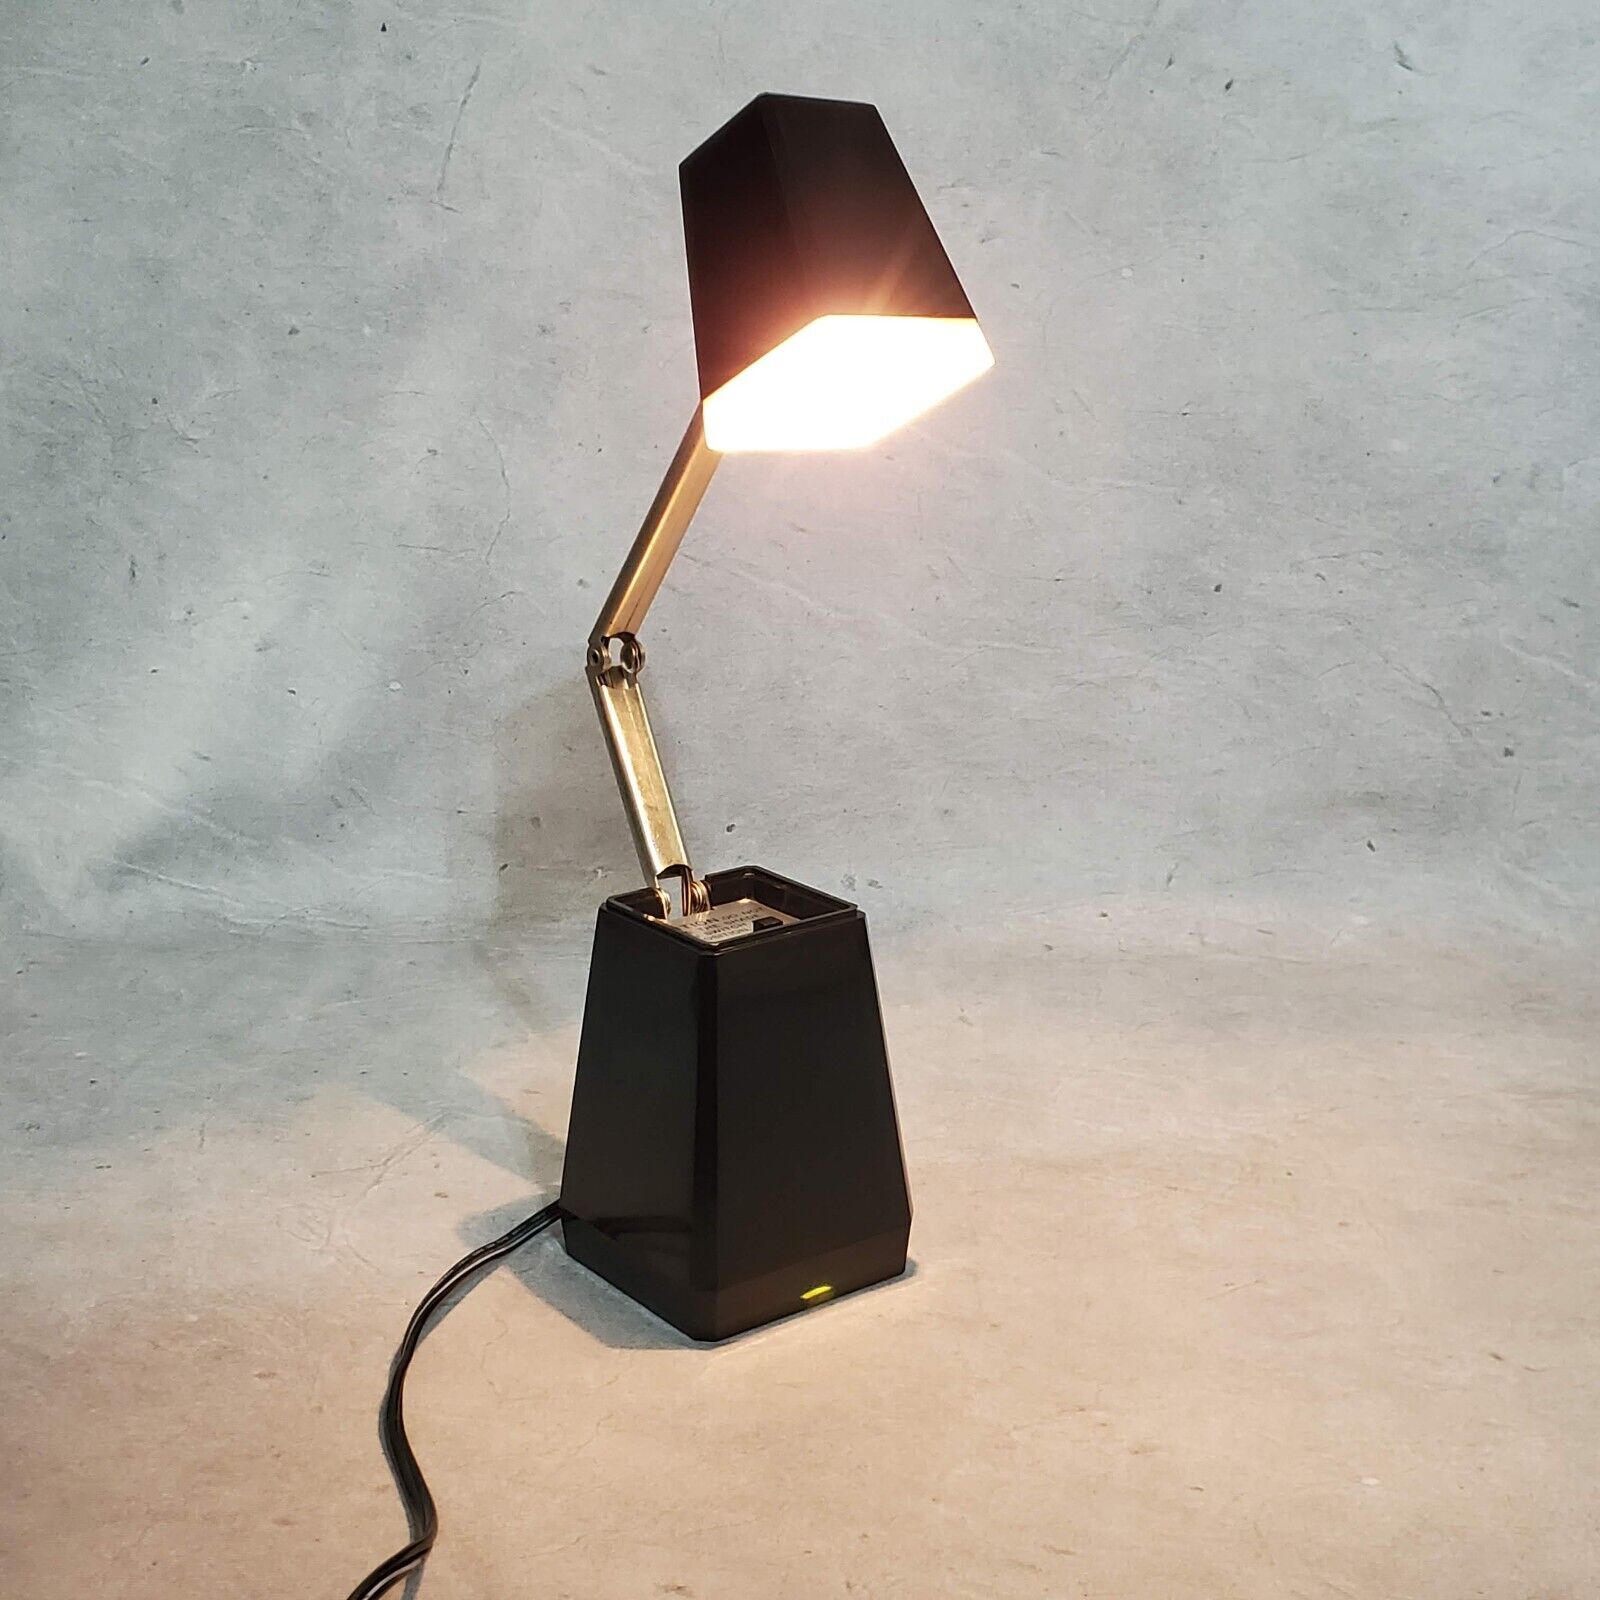 Vintage Windsor Folding Pyramid Desk Lamp High Low Intensity Adjustable Working